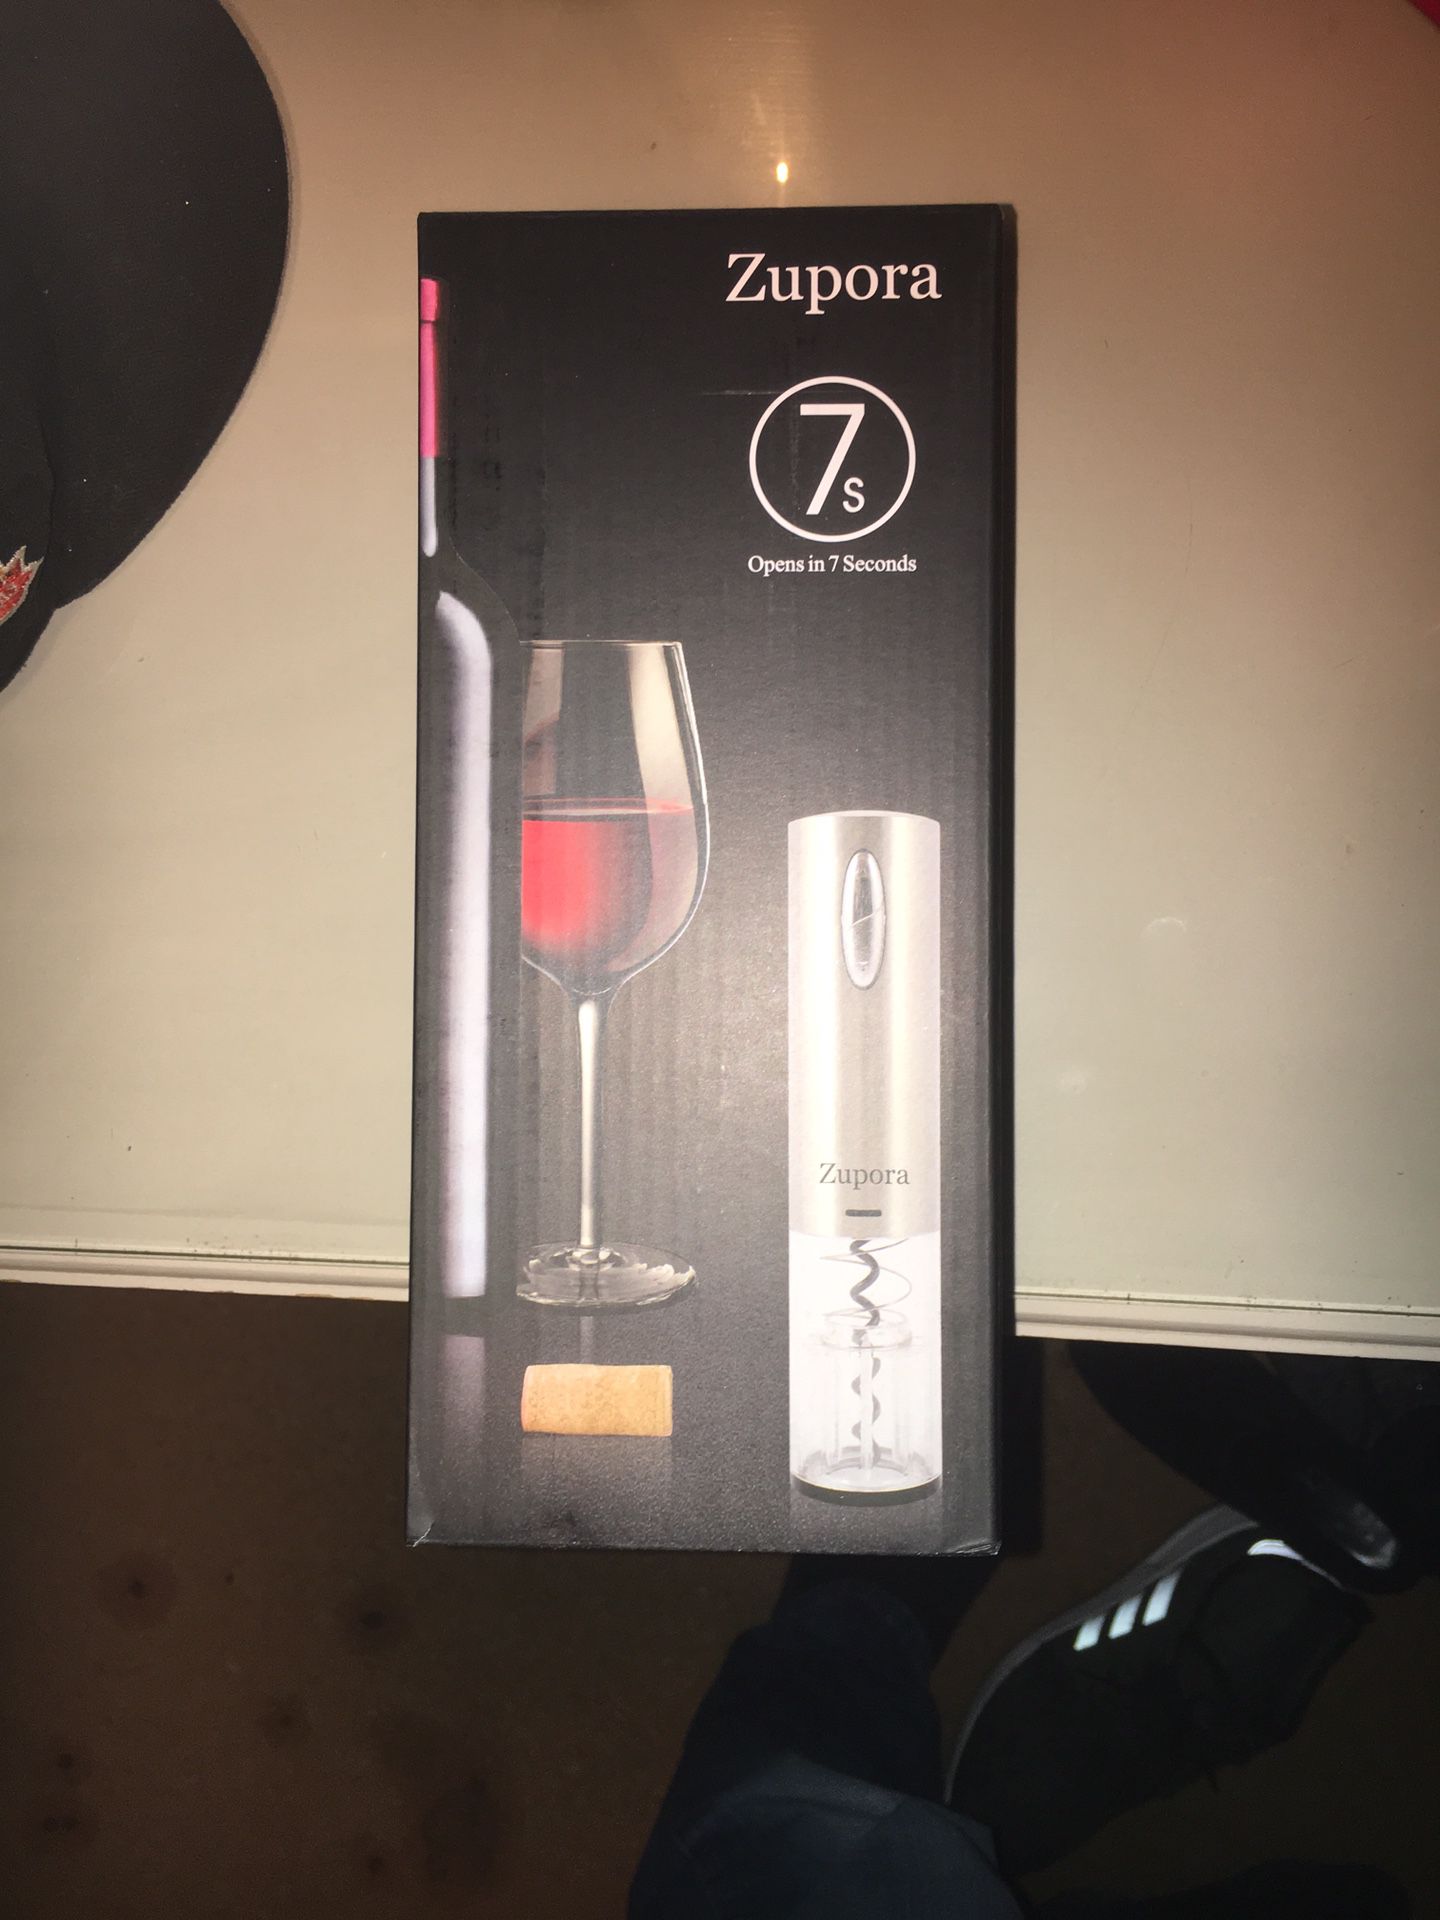 Zupora brand new electric wine opener